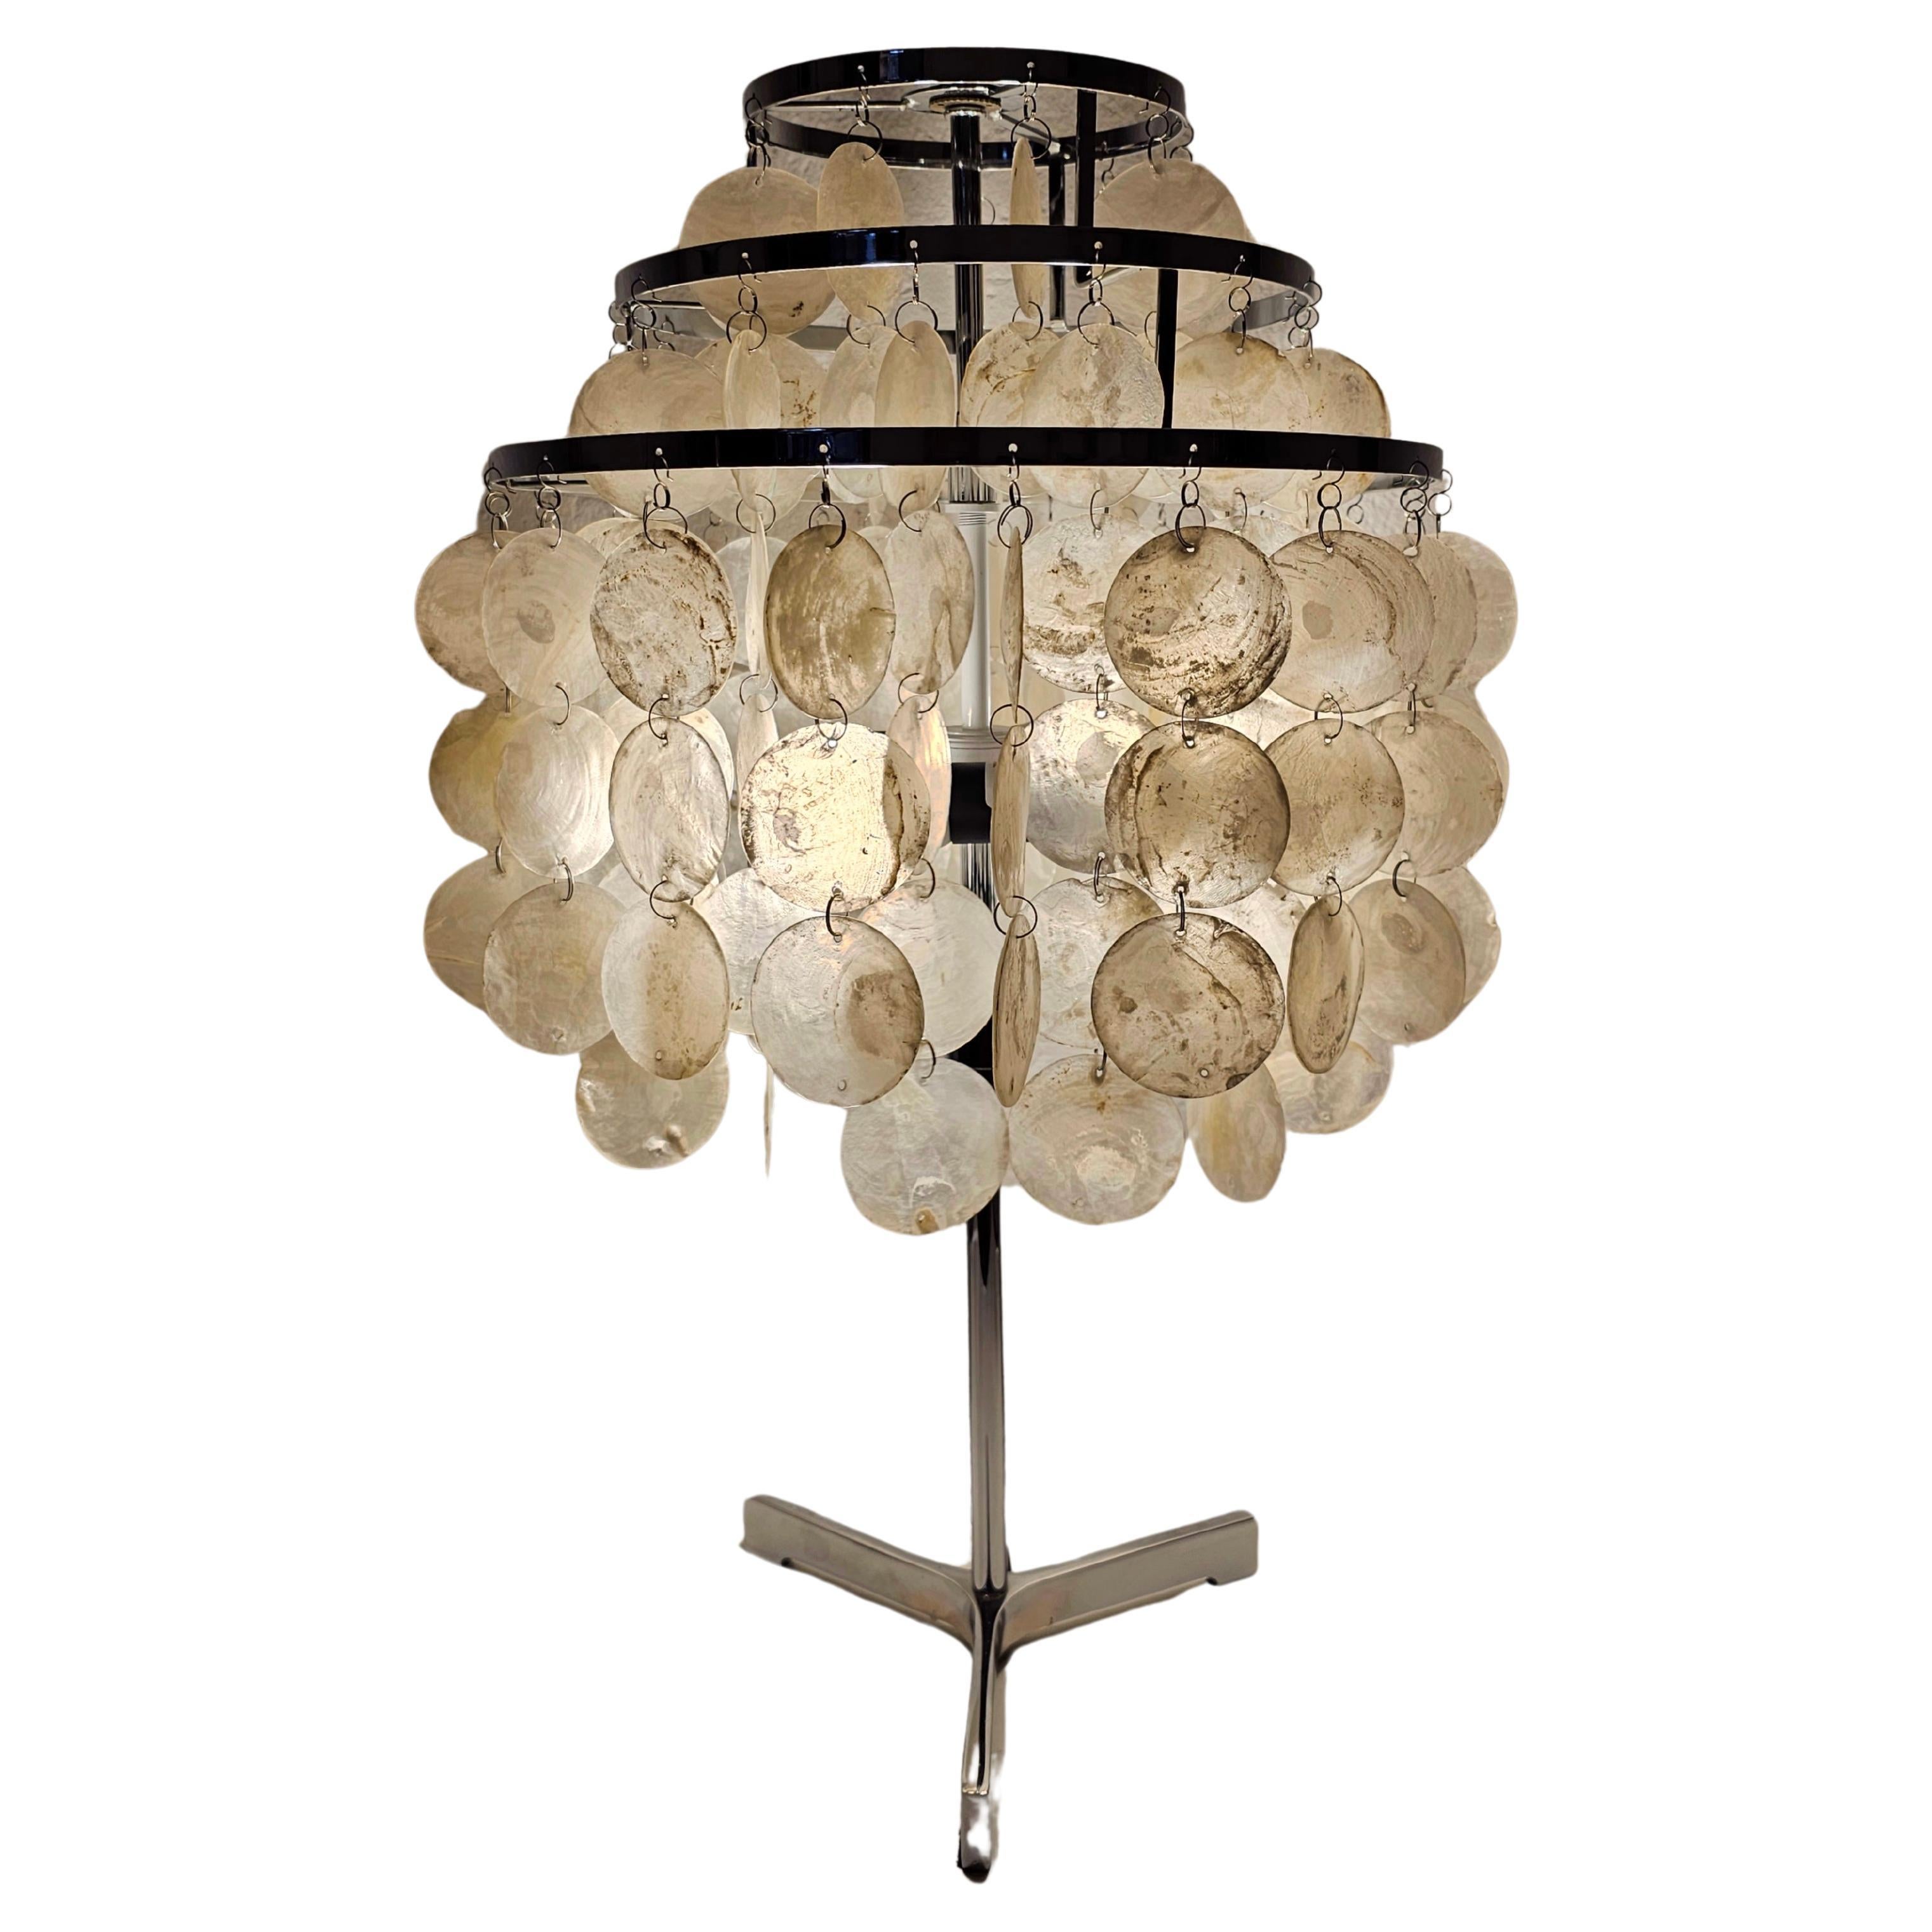 Capiz Shell Table Lamp in style of Verner Panton Fantasy Lamp, USA 1980s